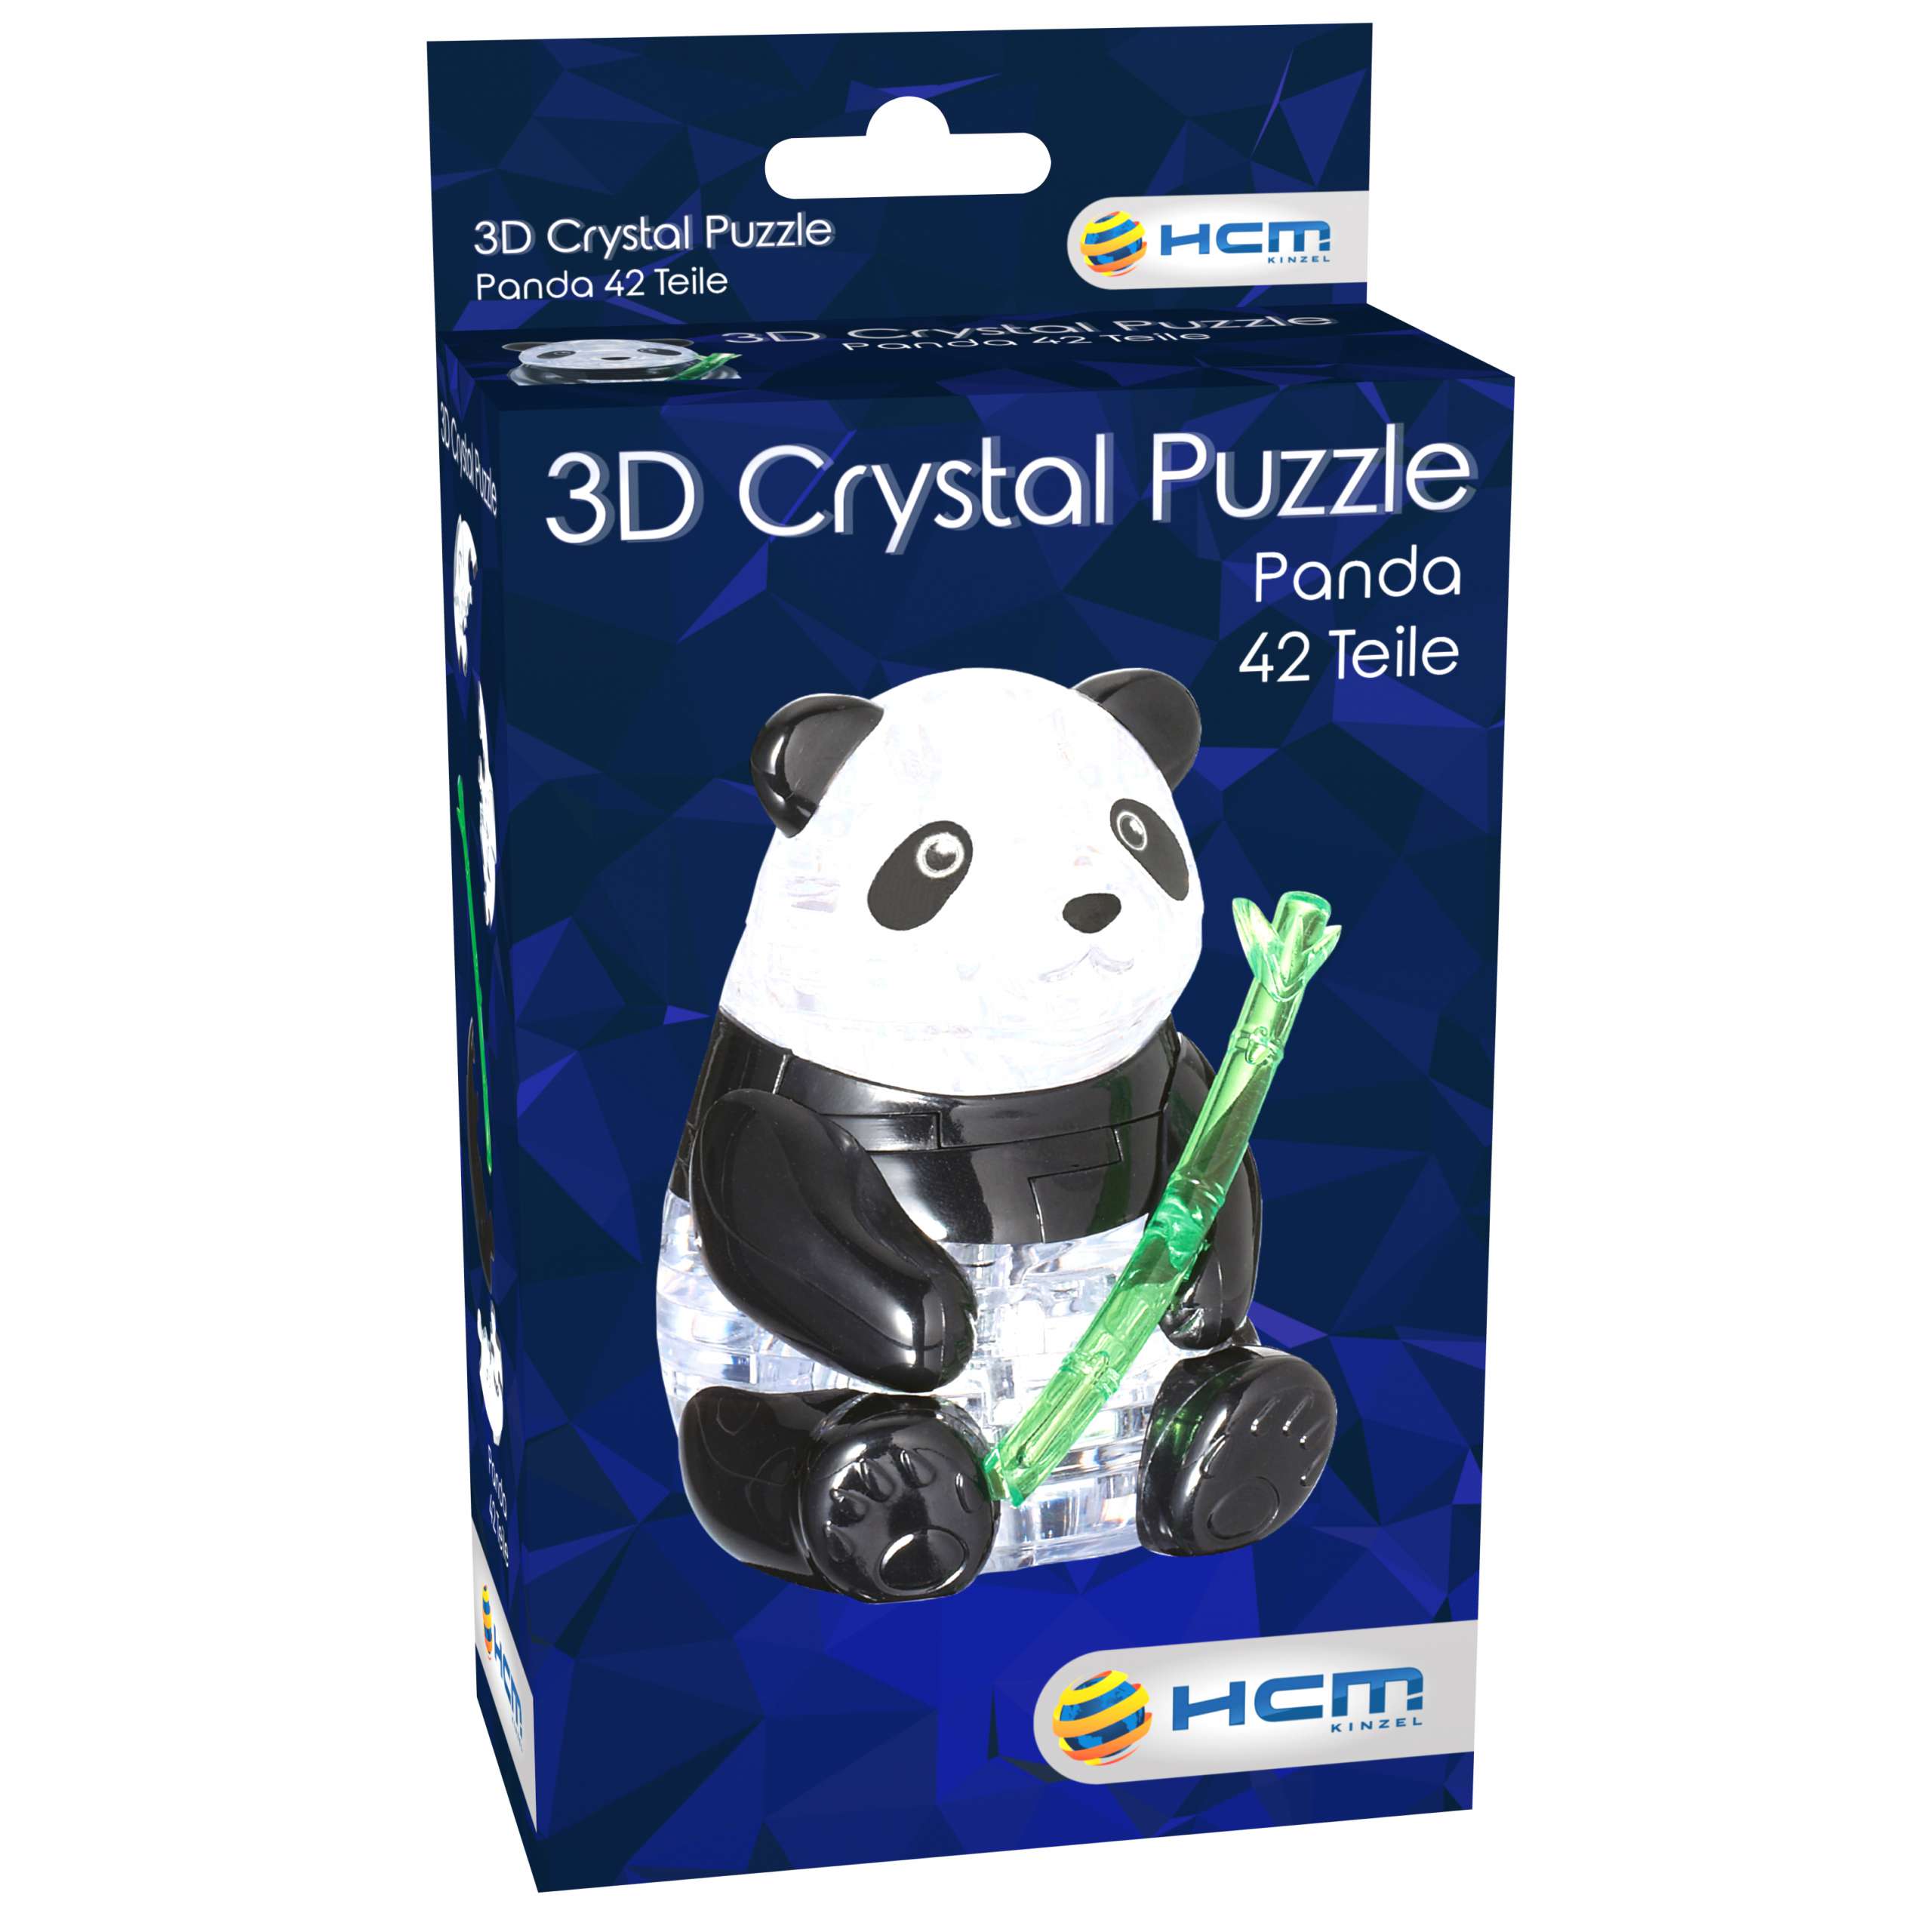 46 Teile 3D Crystal Puzzle Trauben lila 